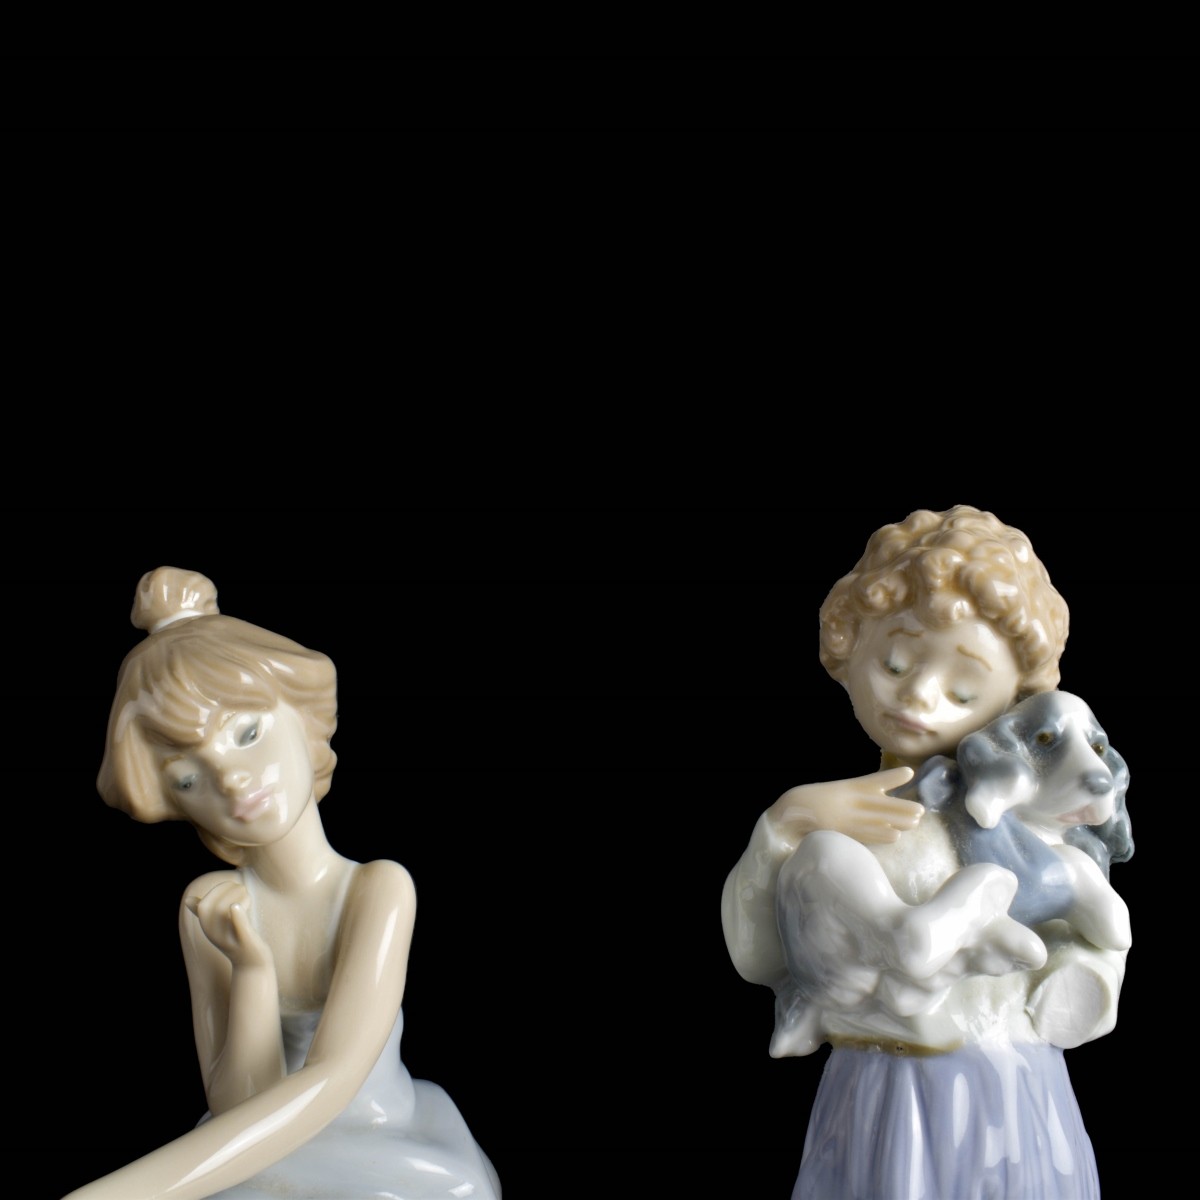 Lladro Glazed Porcelain Figurines